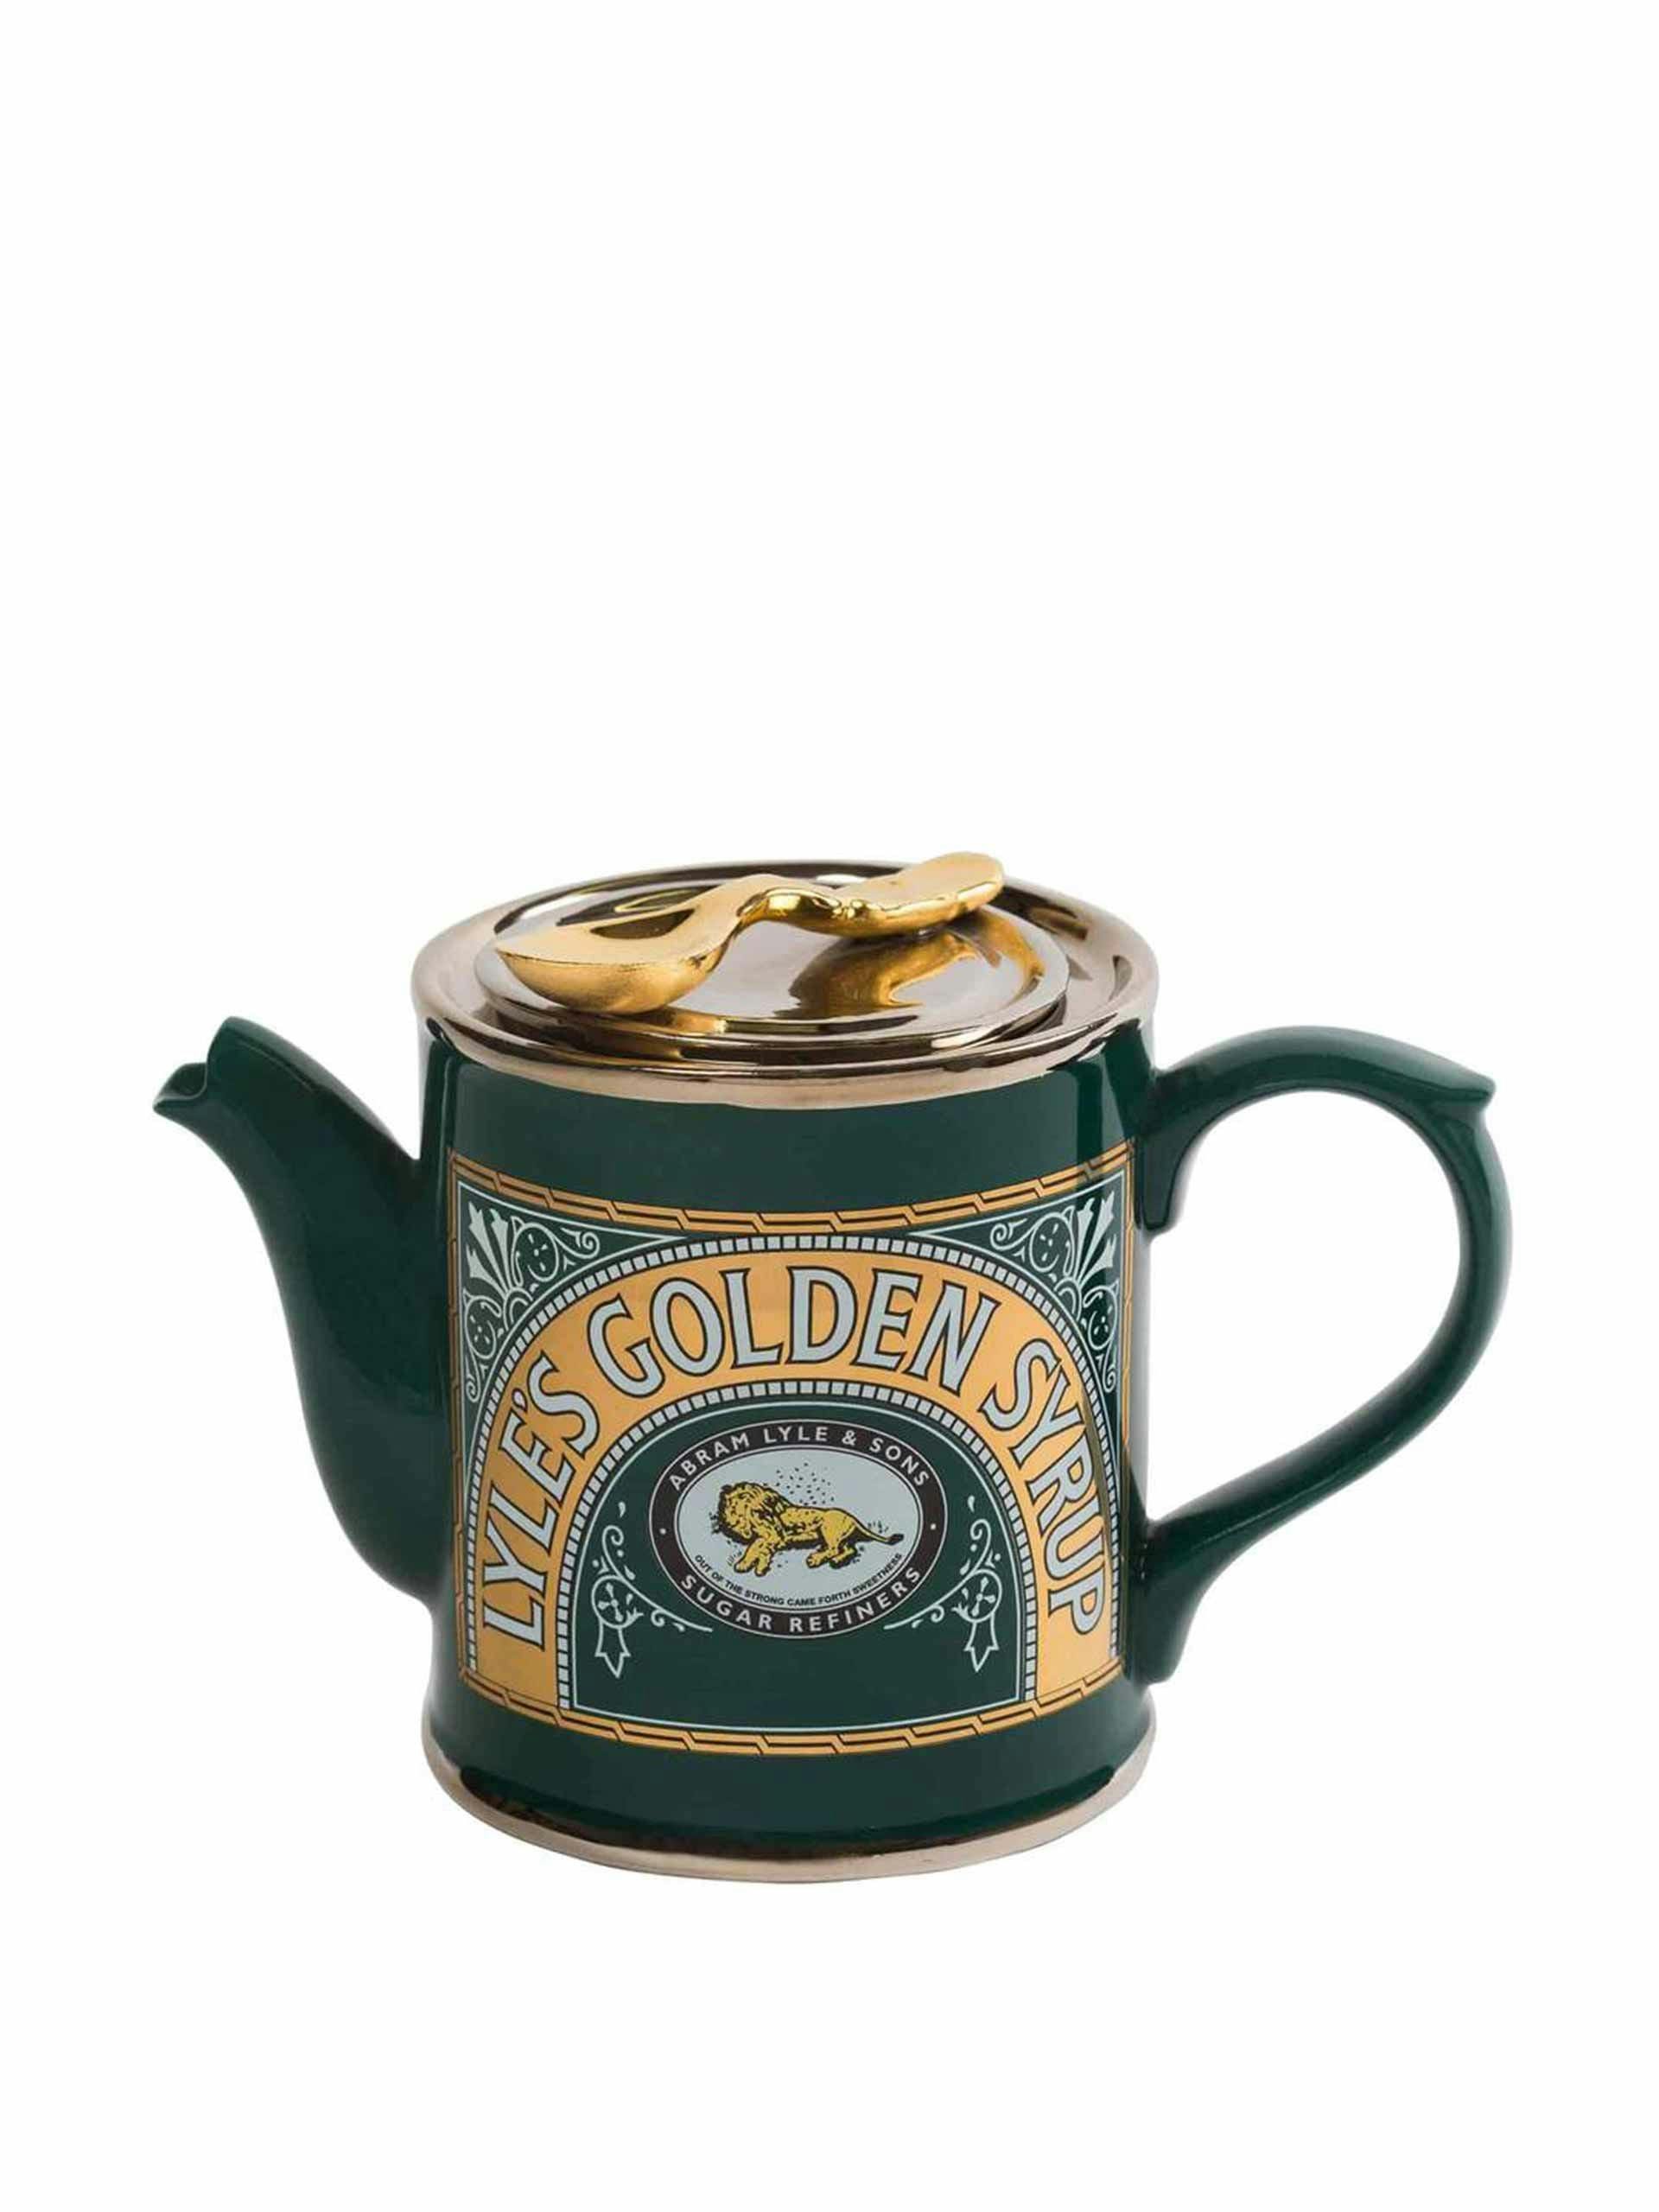 Golden syrup teapot